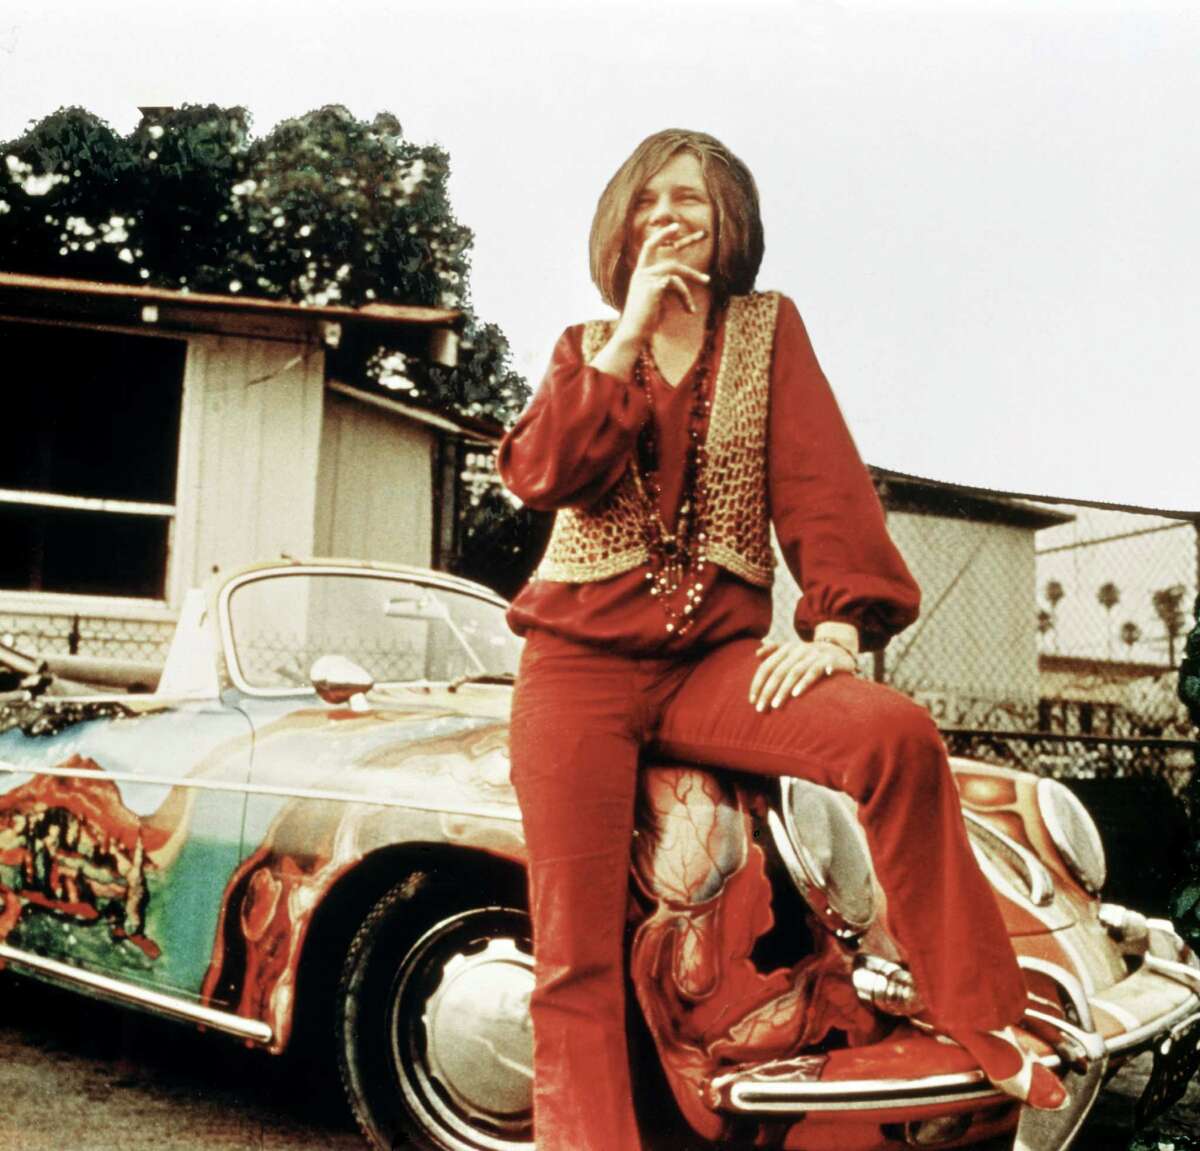 Janis Joplin through the years